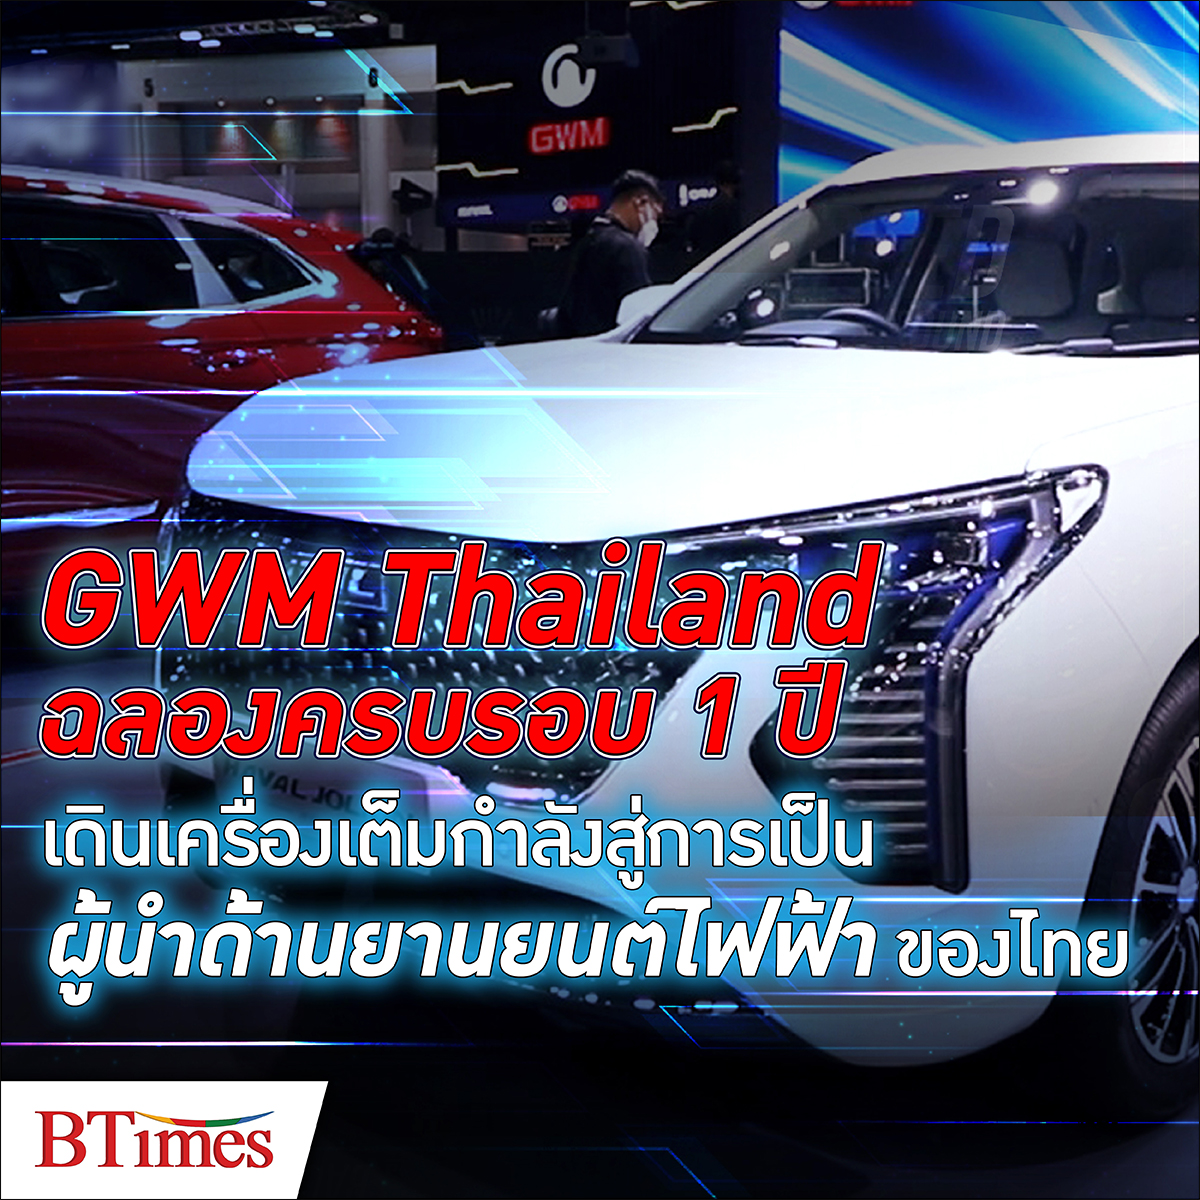 BTimes: GWM เกรท วอลล์ มอเตอร์ฉลอง ครบรอบ 1 ปี ในประเทศไทย พร้อมเดินเครื่องเต็มกำลังสู่การเป็นผู้นำด้านยานยนต์ไฟฟ้าของไทย